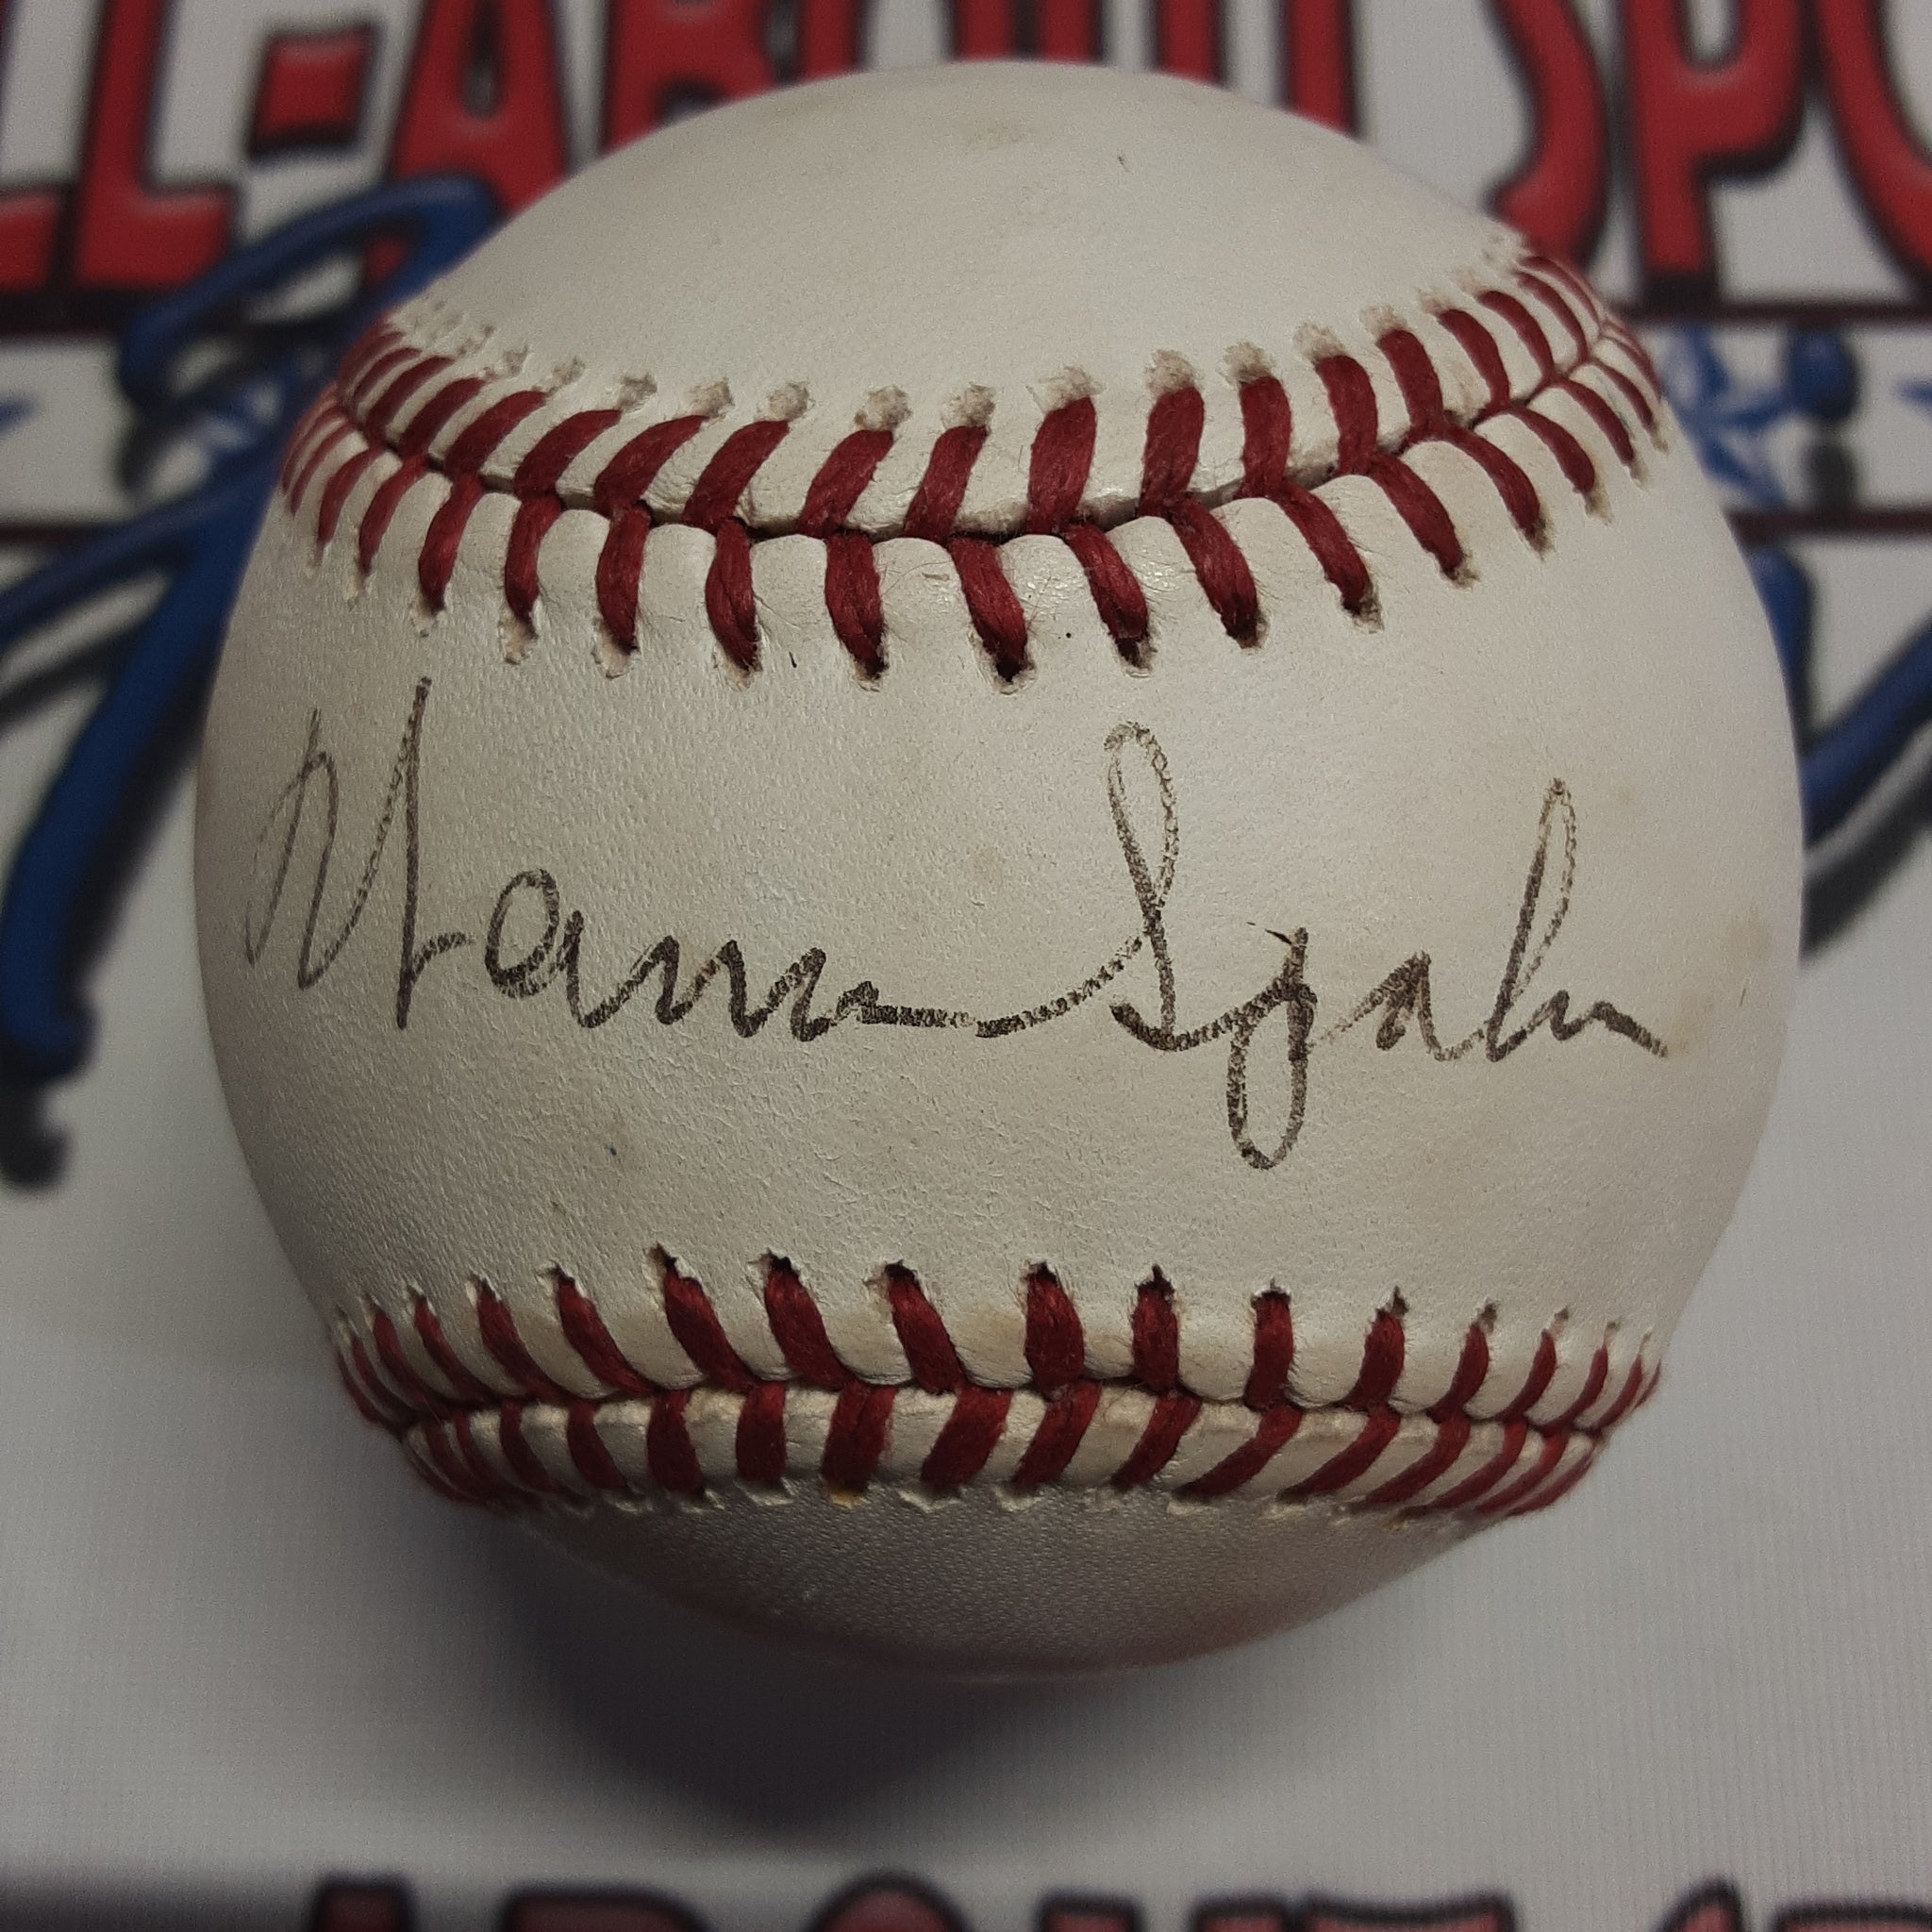 Warren Spahn Authentic Signed Baseball Autographed JSA.